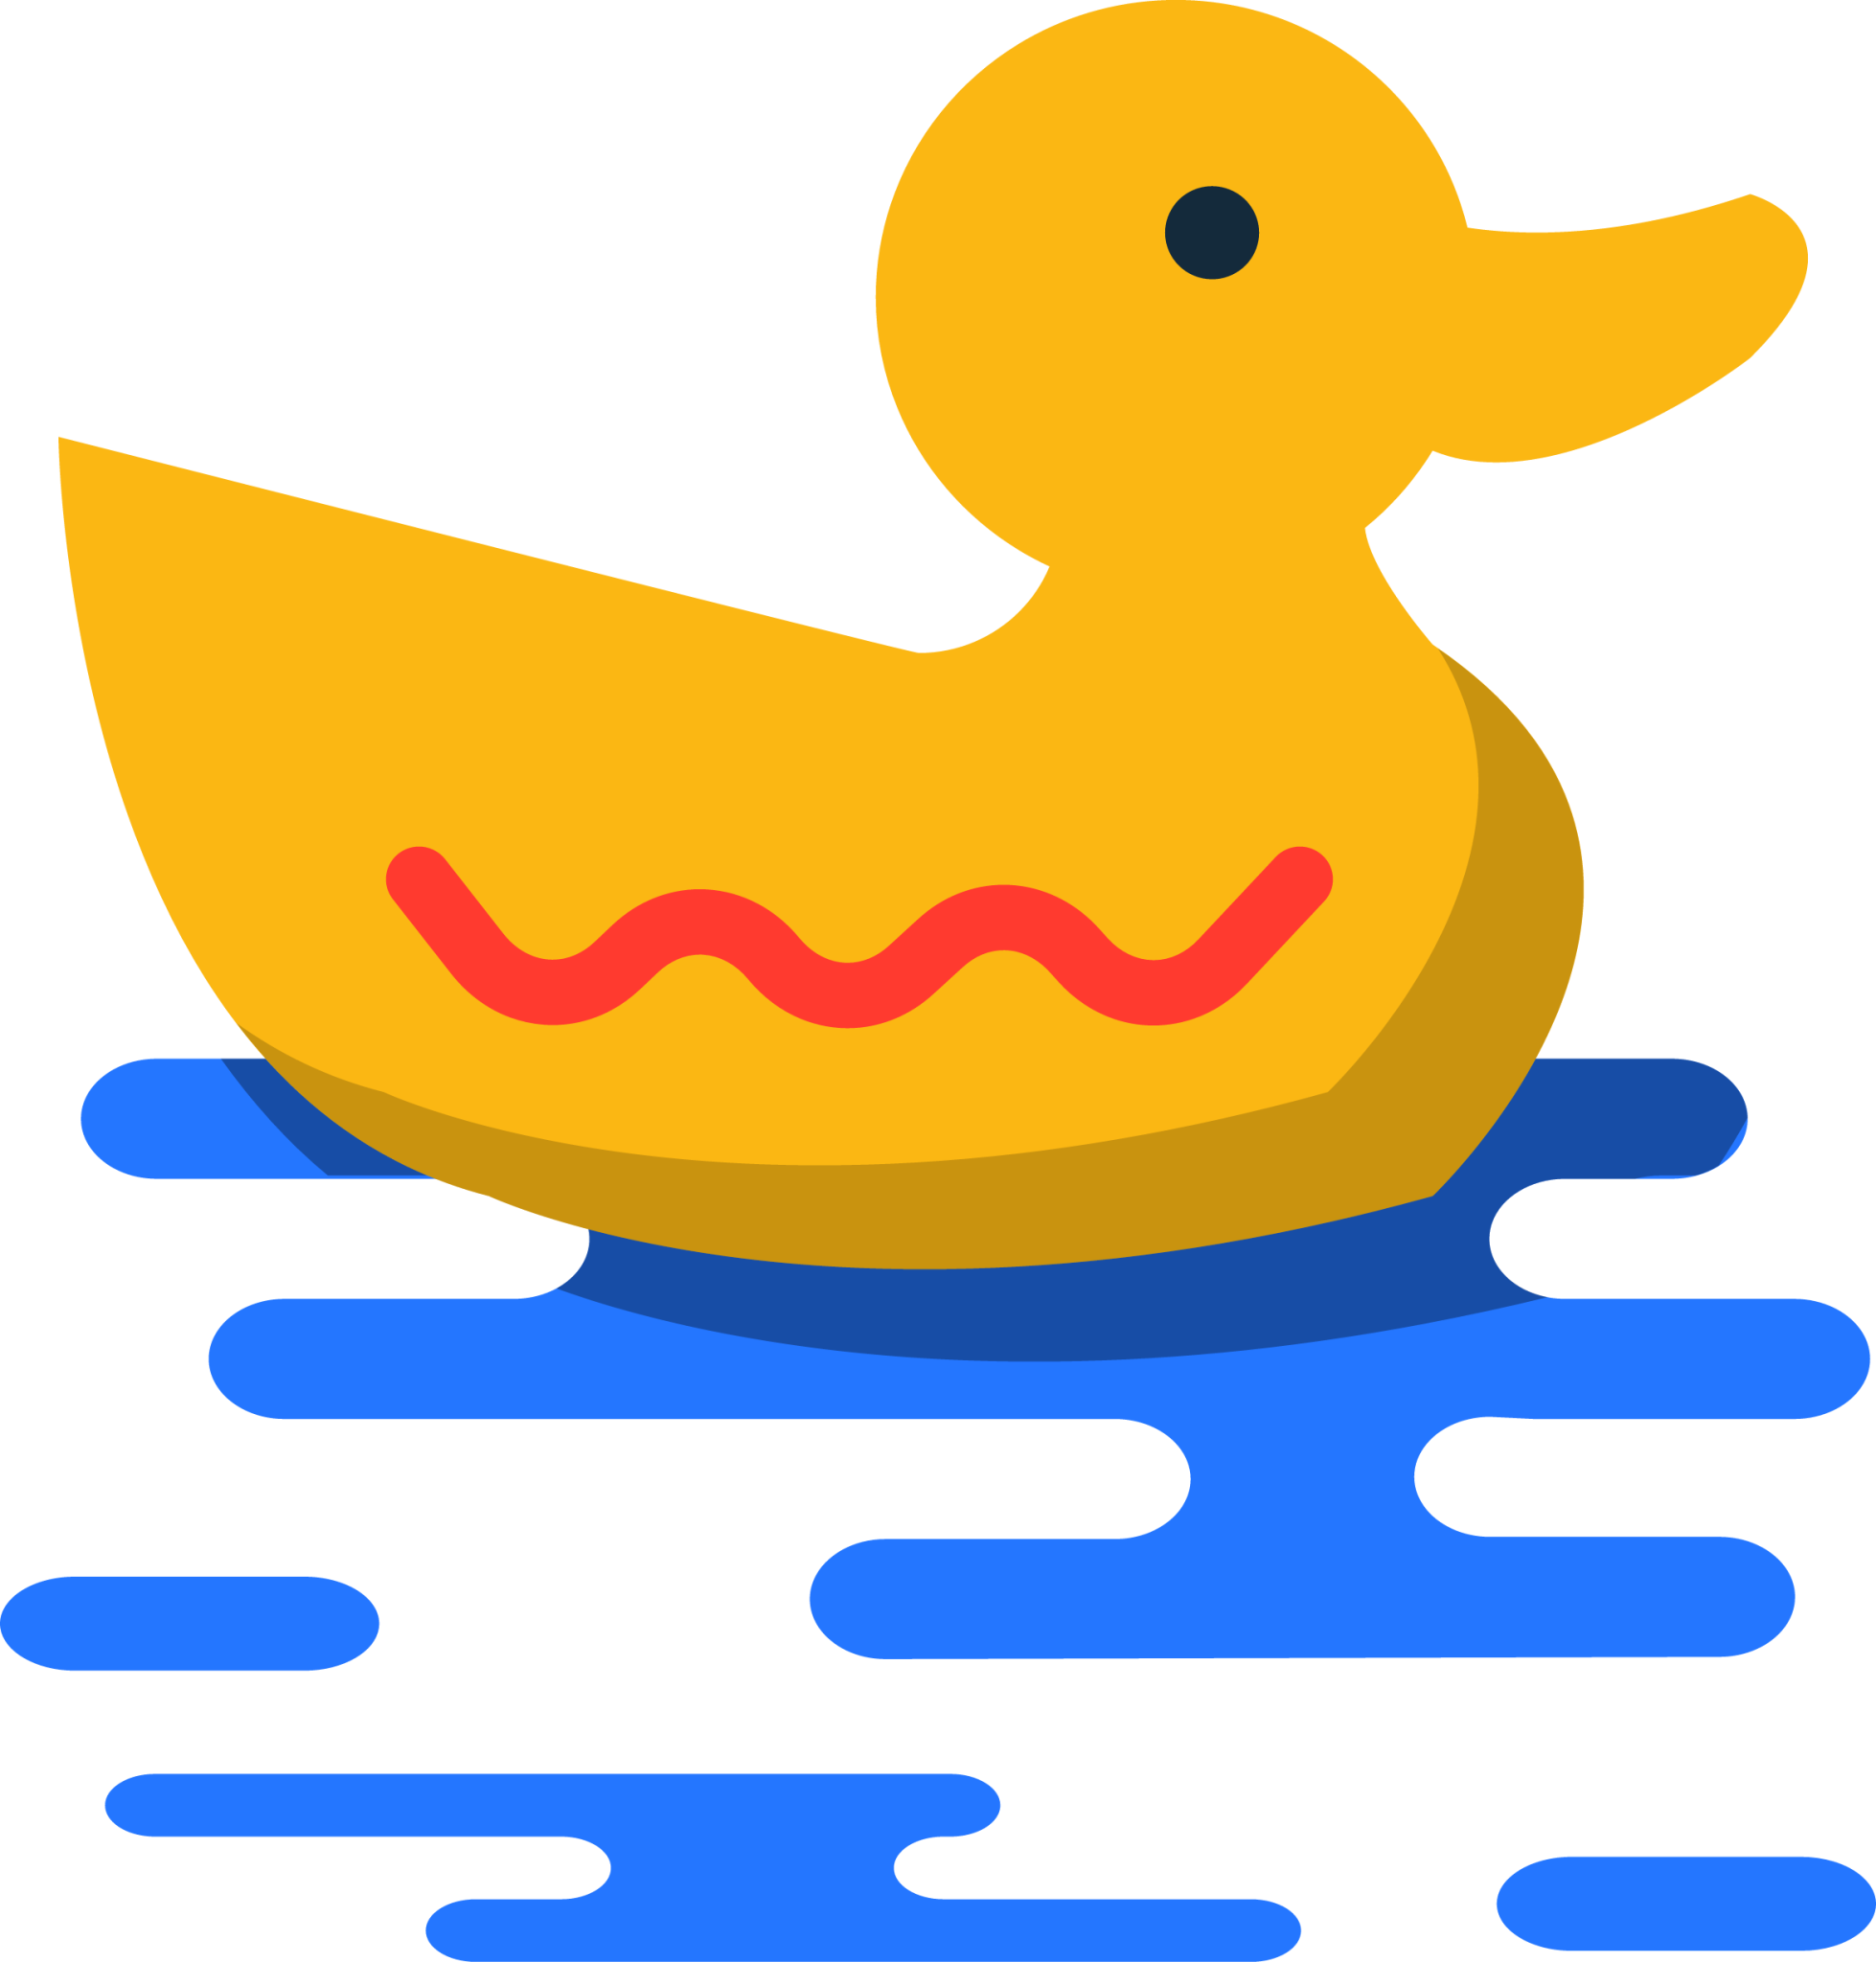 rubber duck illustration